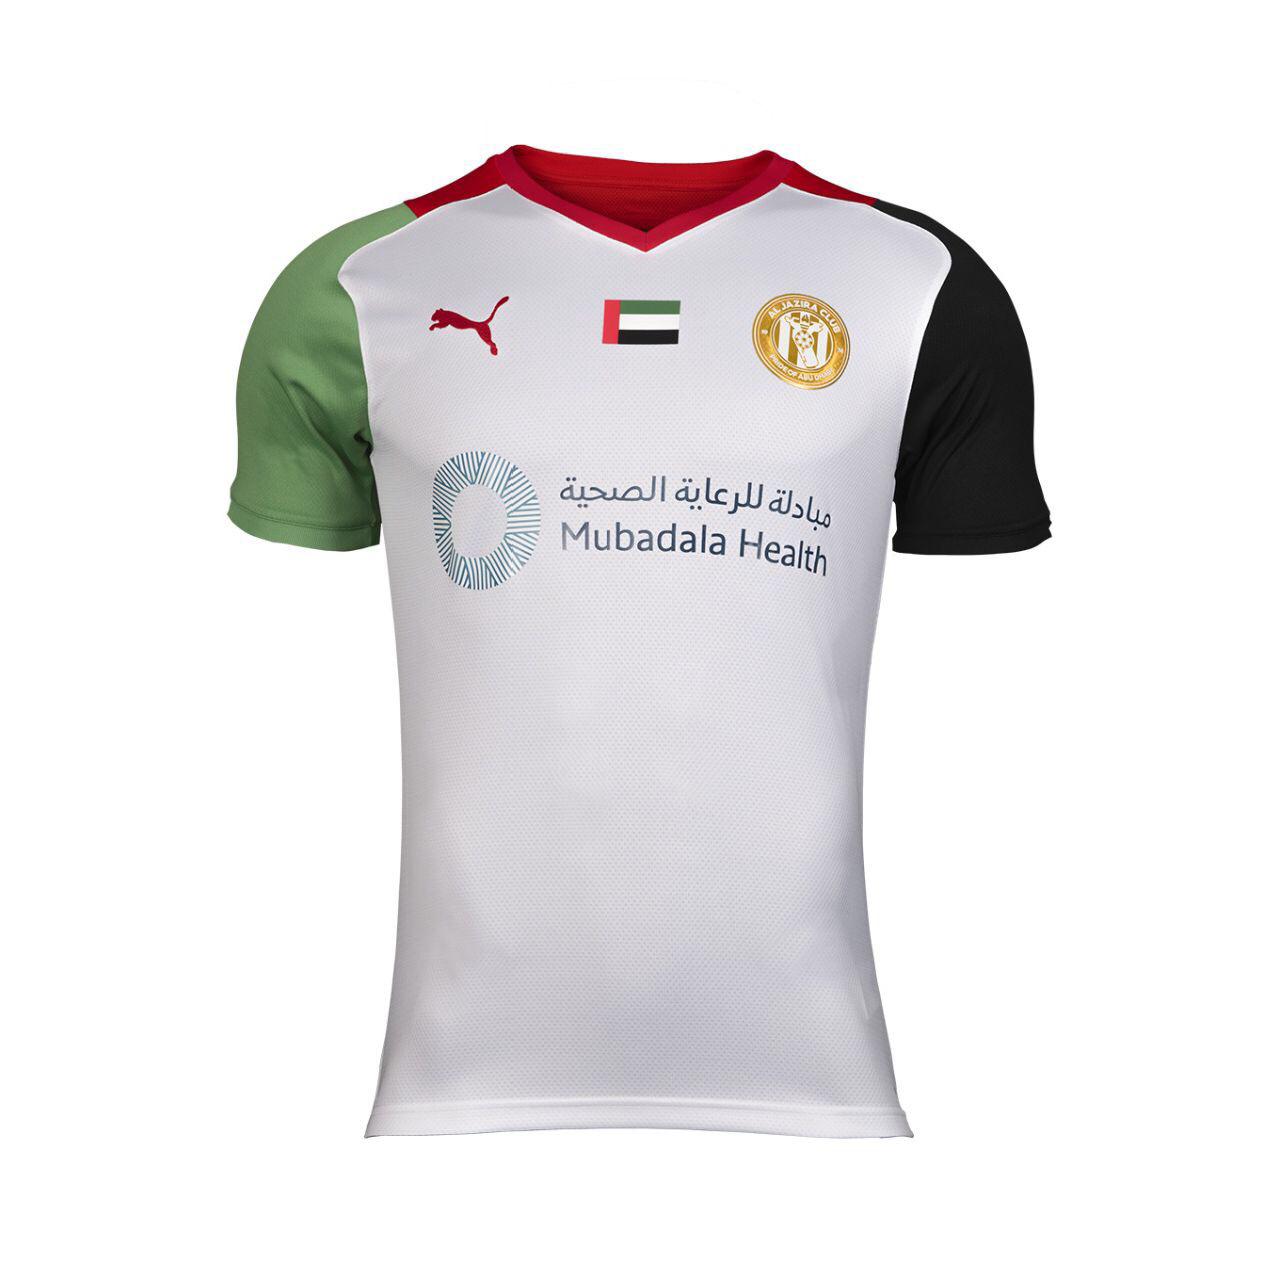 Al Jazira Club Official third kit